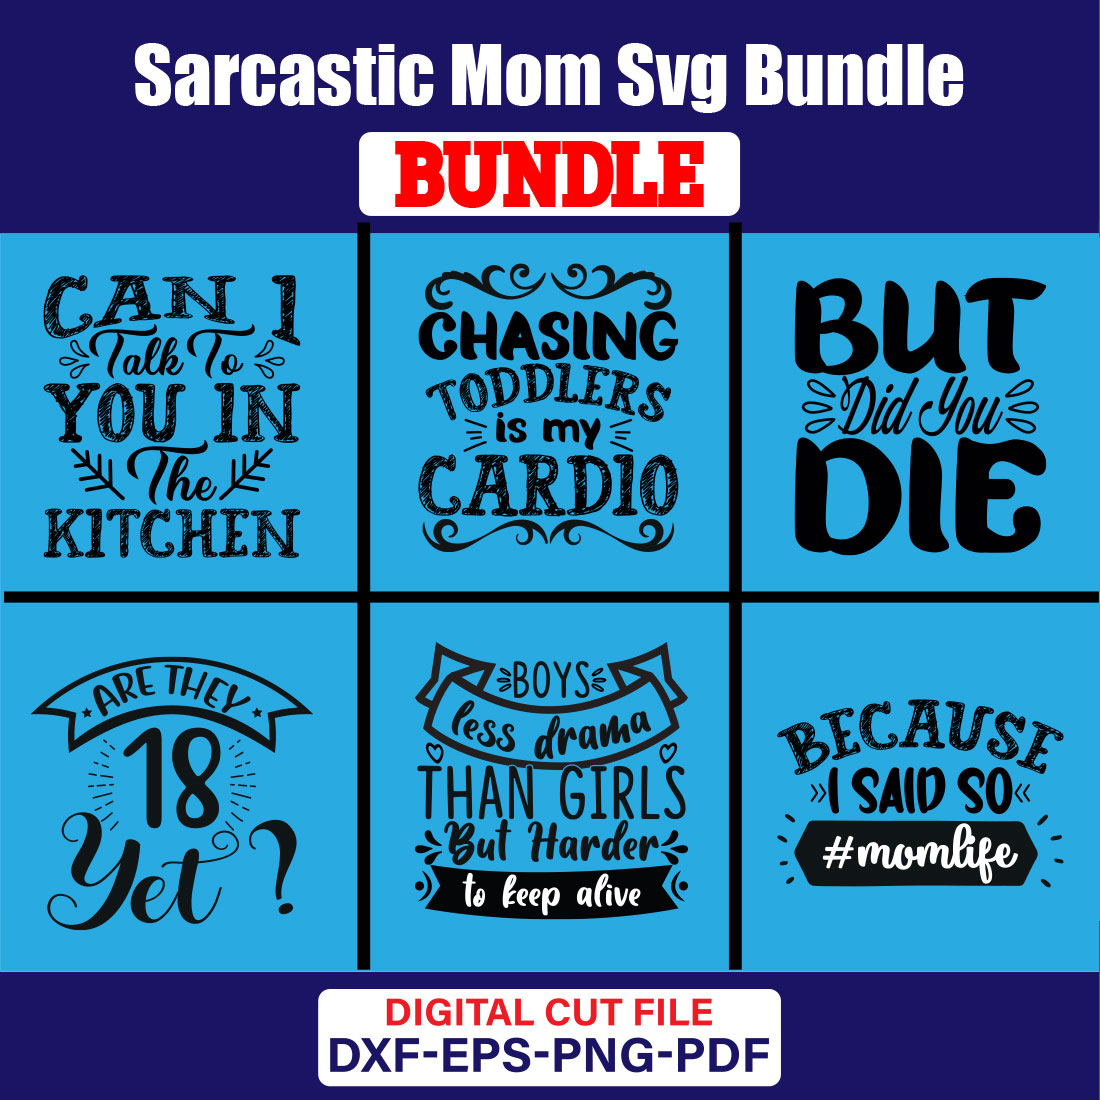 Sarcastic Mom SVG T-shirt Design Bundle Vol-01 cover image.